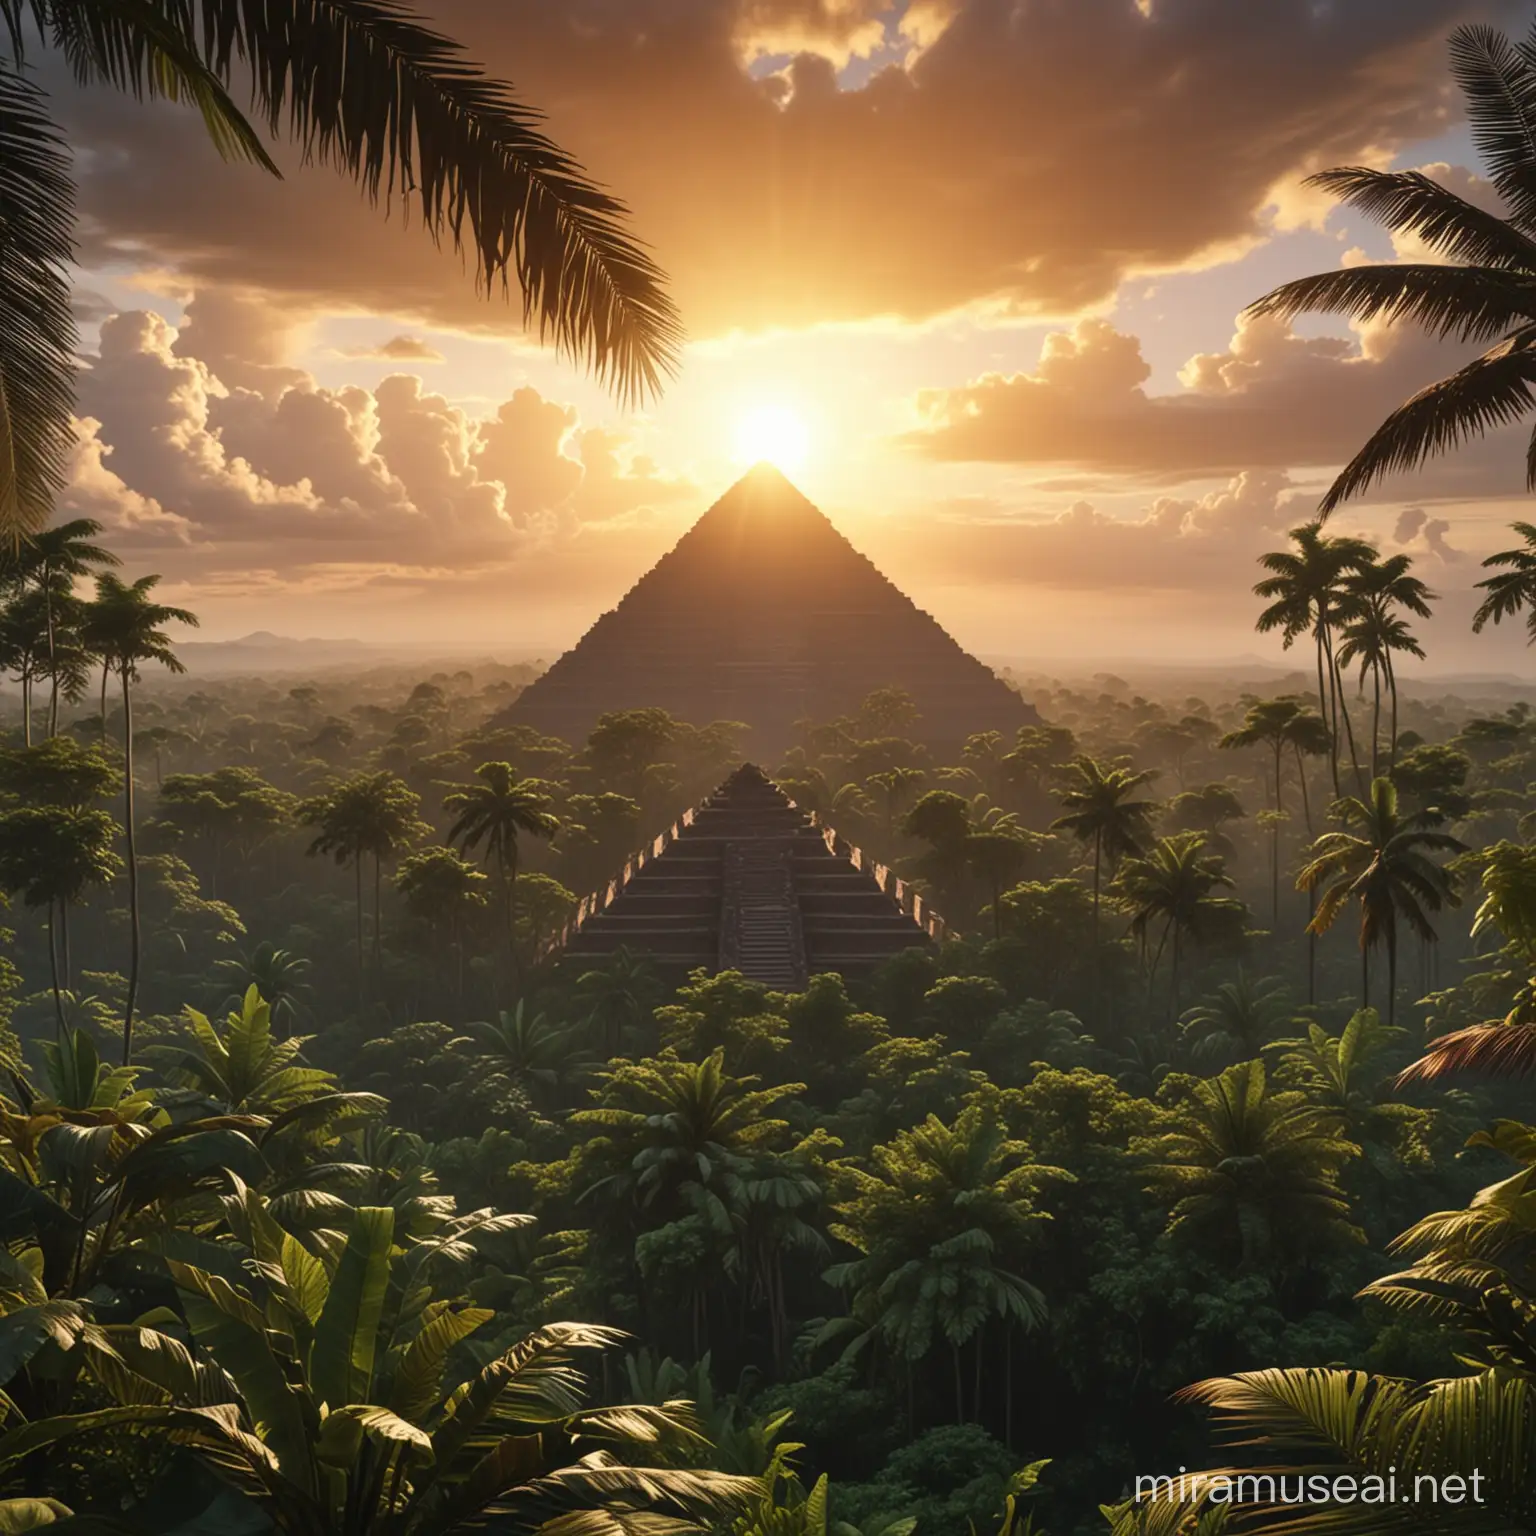 Mesmerizing Sunrise over Mesoamerican Pyramid in Tropical Rainforest